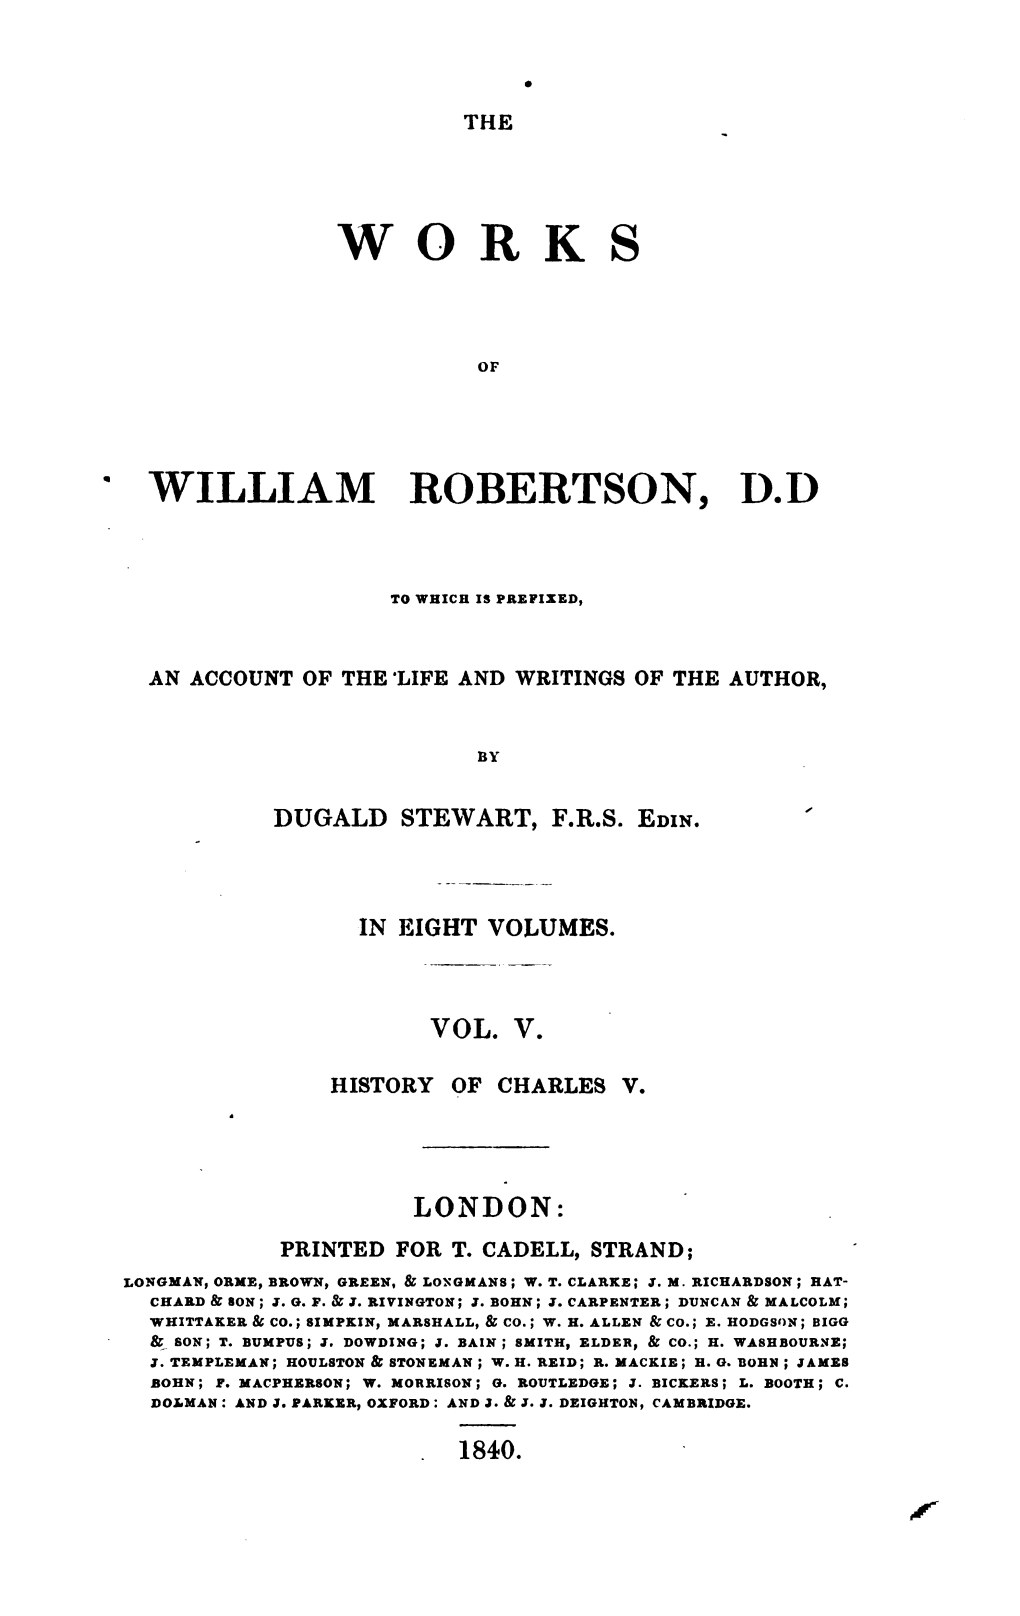 William Robertson, D.D